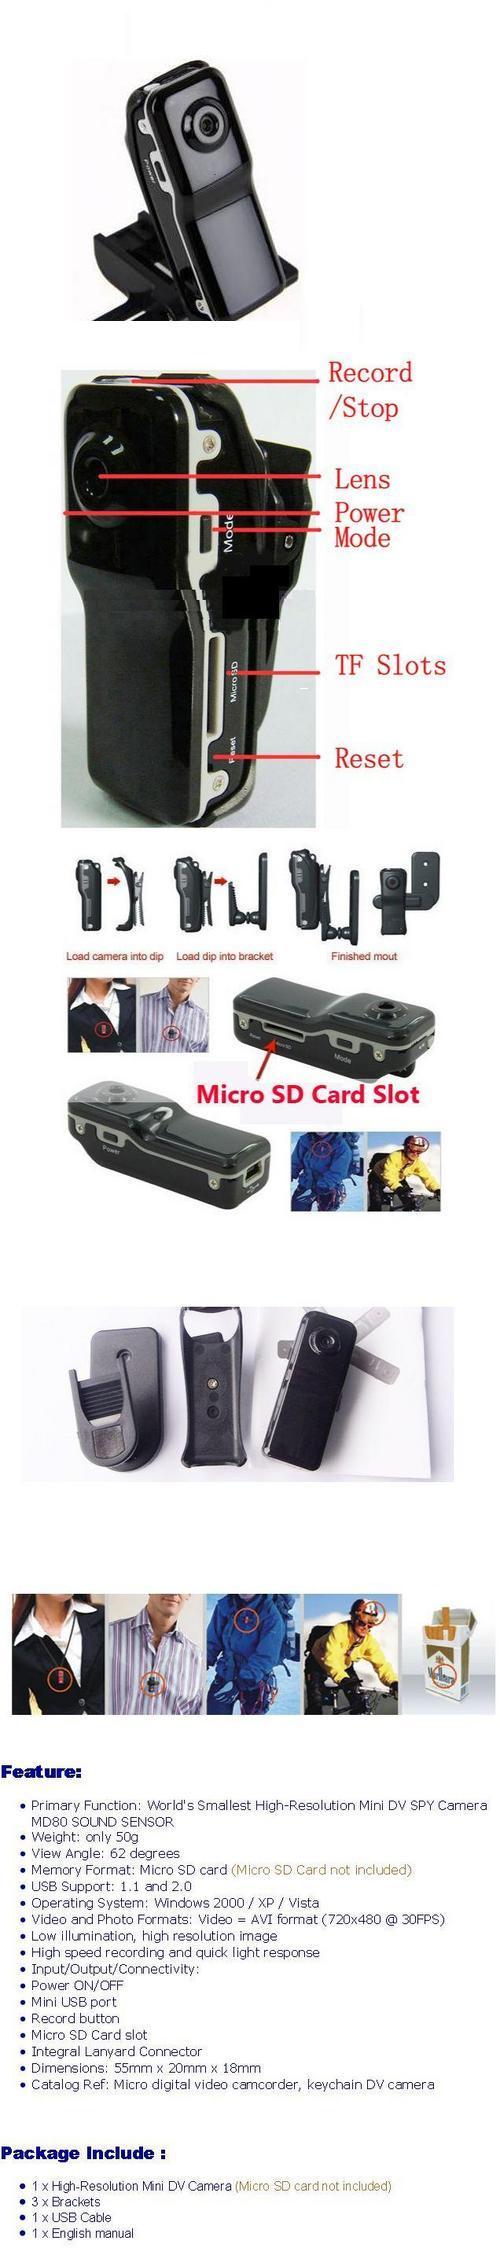 buy video camera gadgets spy kit